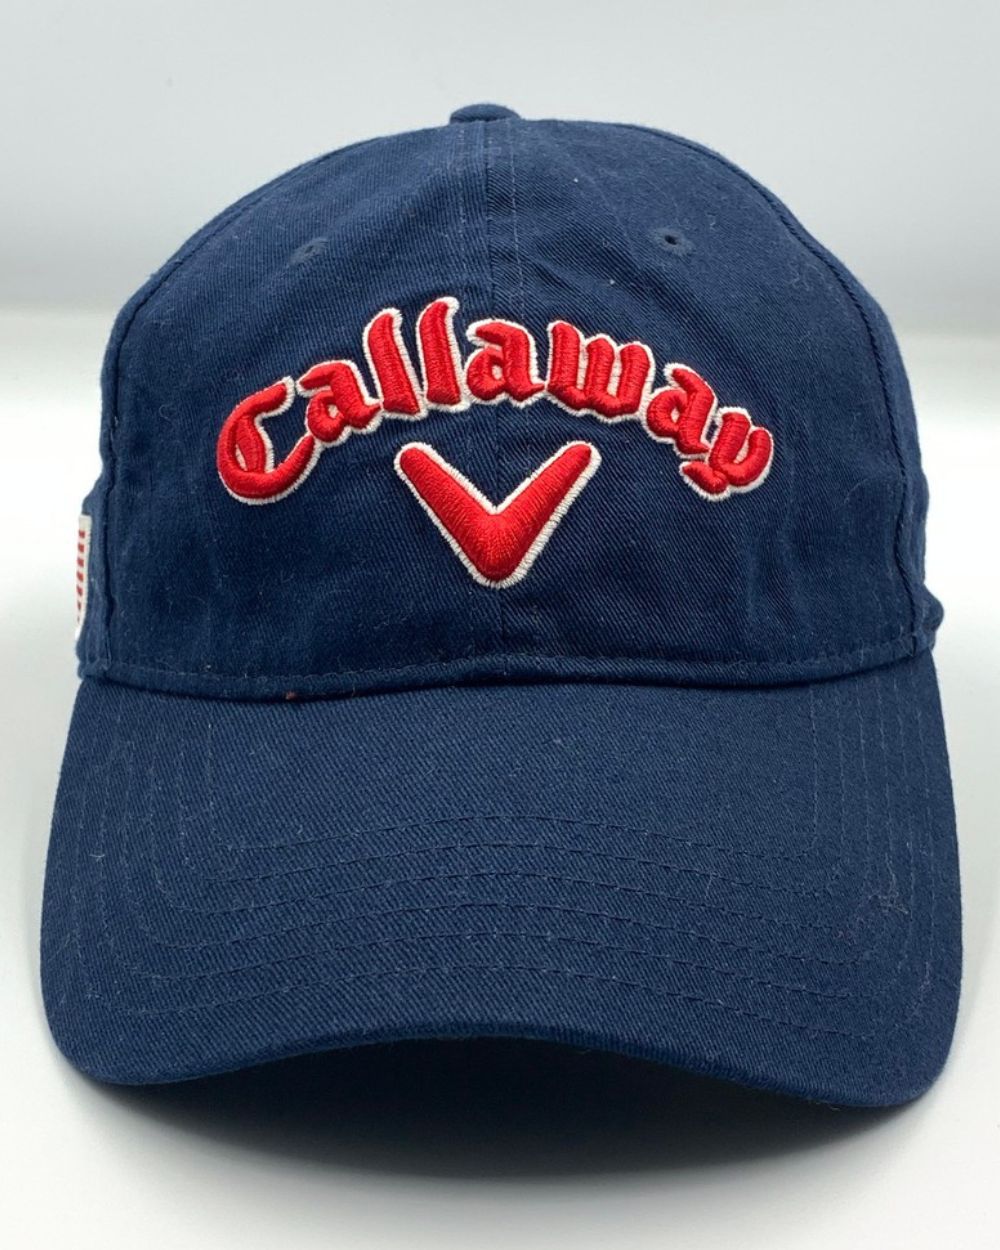 Callaway Branded Original Branded Caps For Men